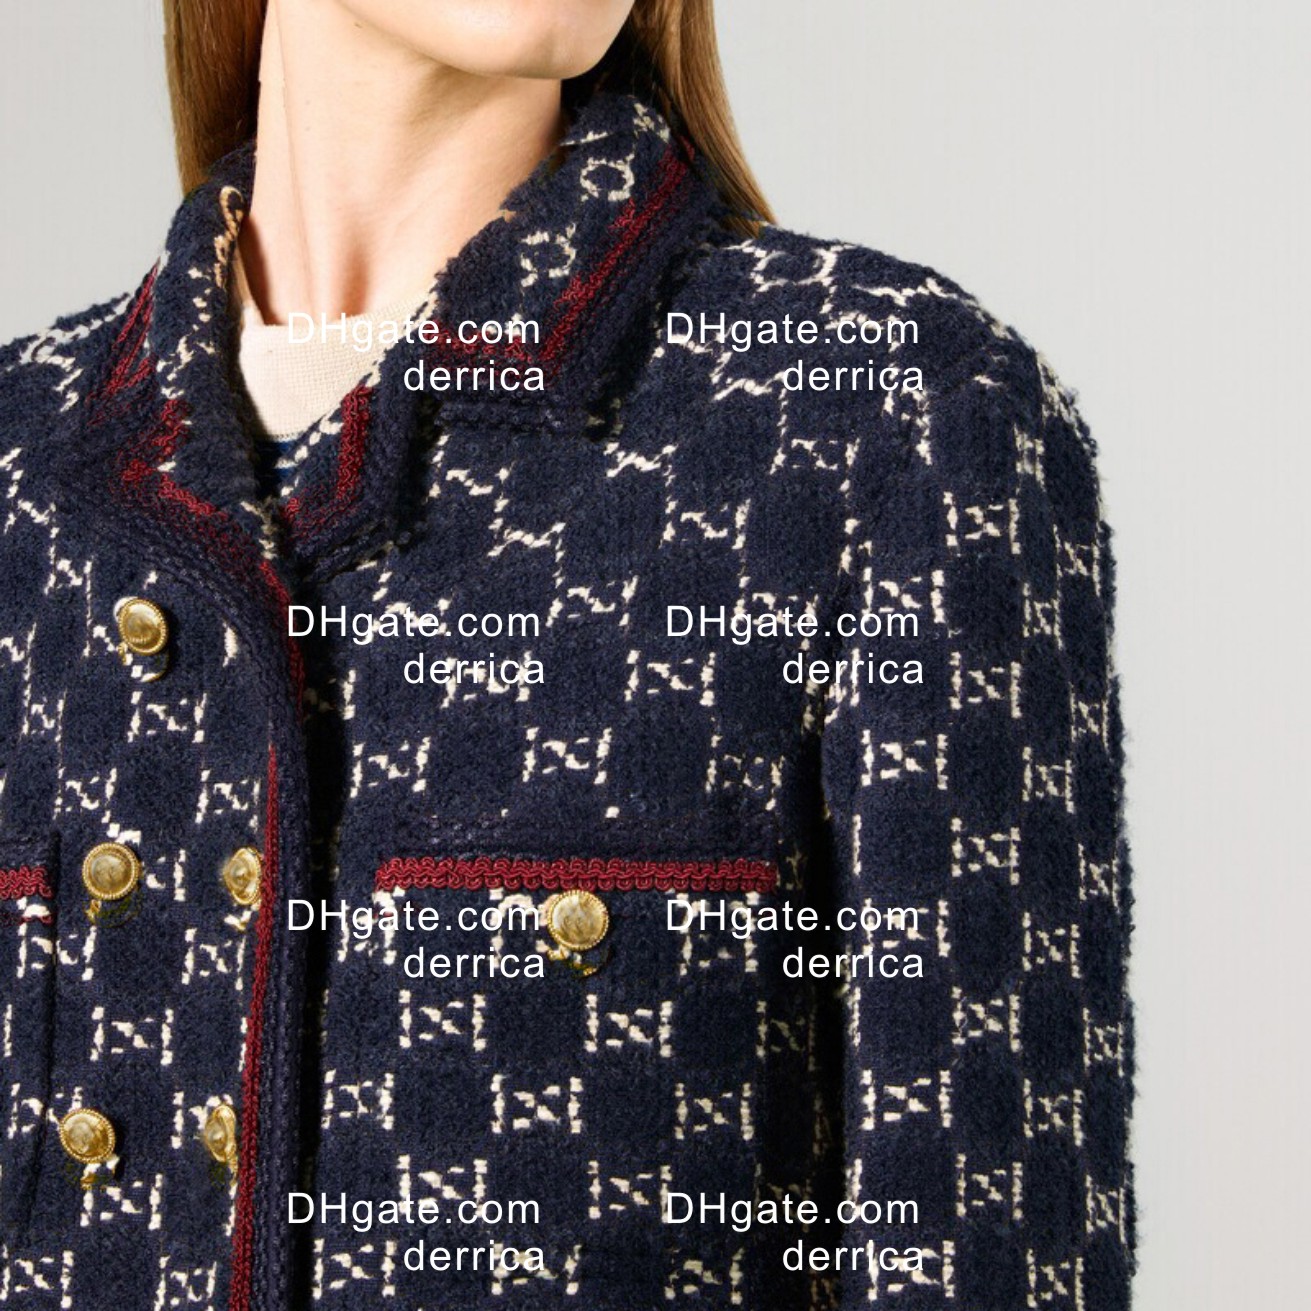 M78 mulheres terno roupas de grife blazer jaqueta casaco mulher duplo G primavera tweed novos tops lançados